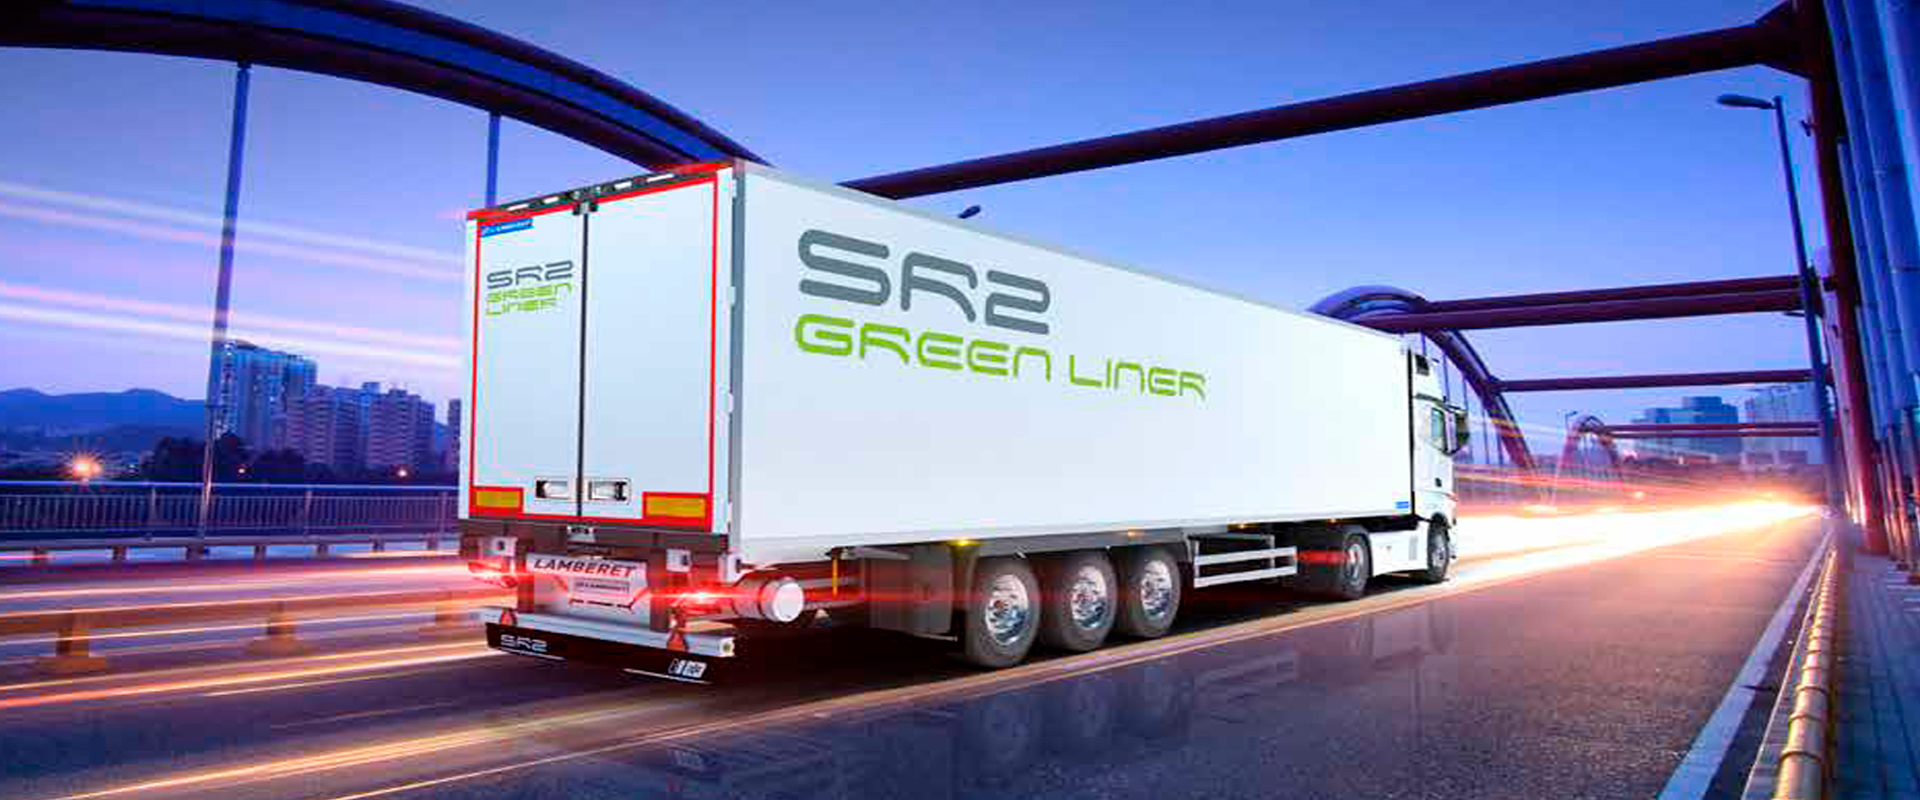 SR2 Green Liner